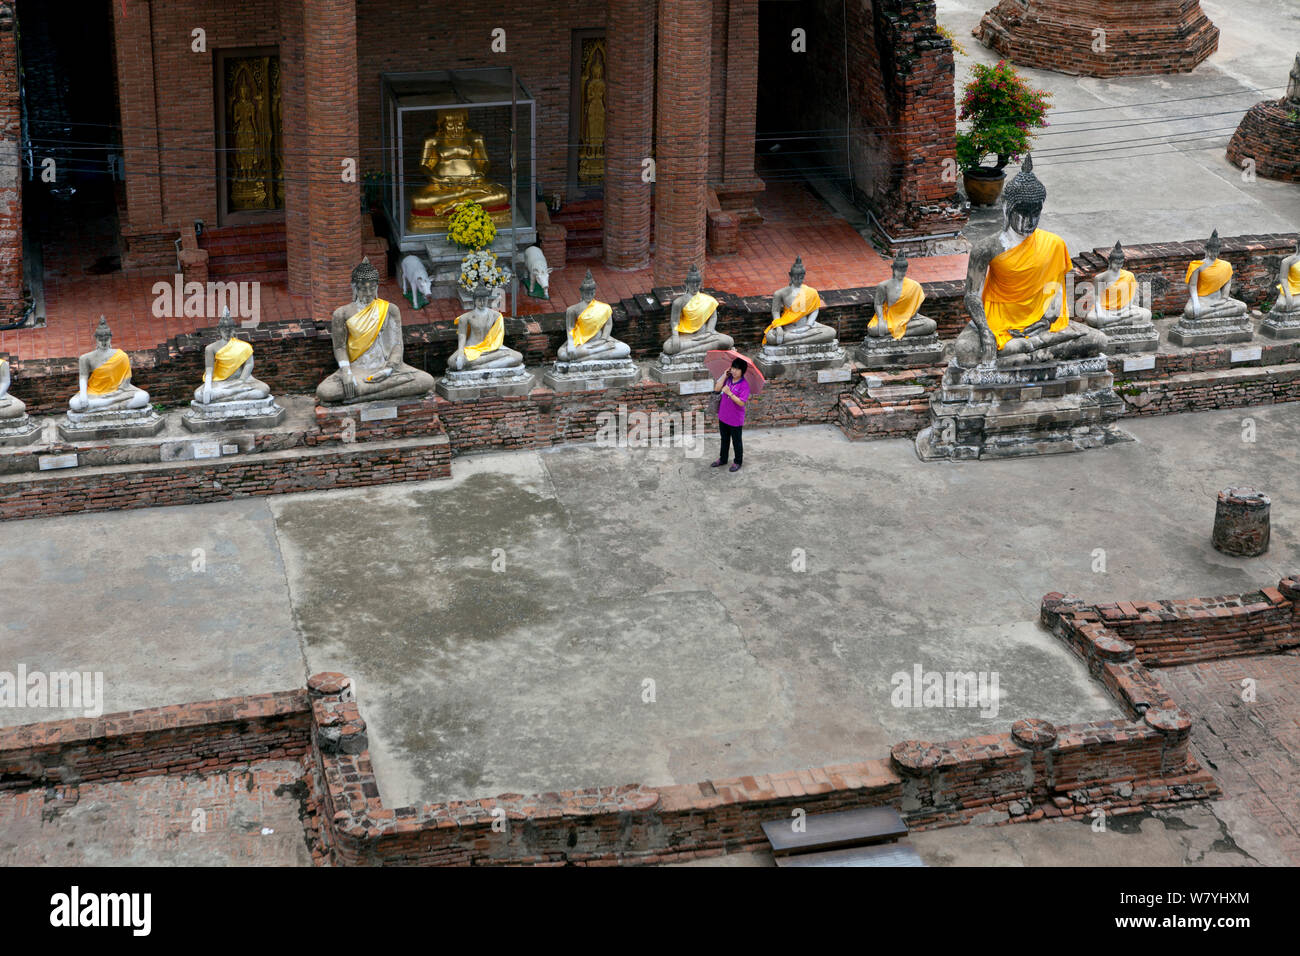 Row of Buddhas with yellow sashes, and woman on phone, Wat Yai Chaya Mongkol, Ayutthaya. Thailand, September 2014. Stock Photo